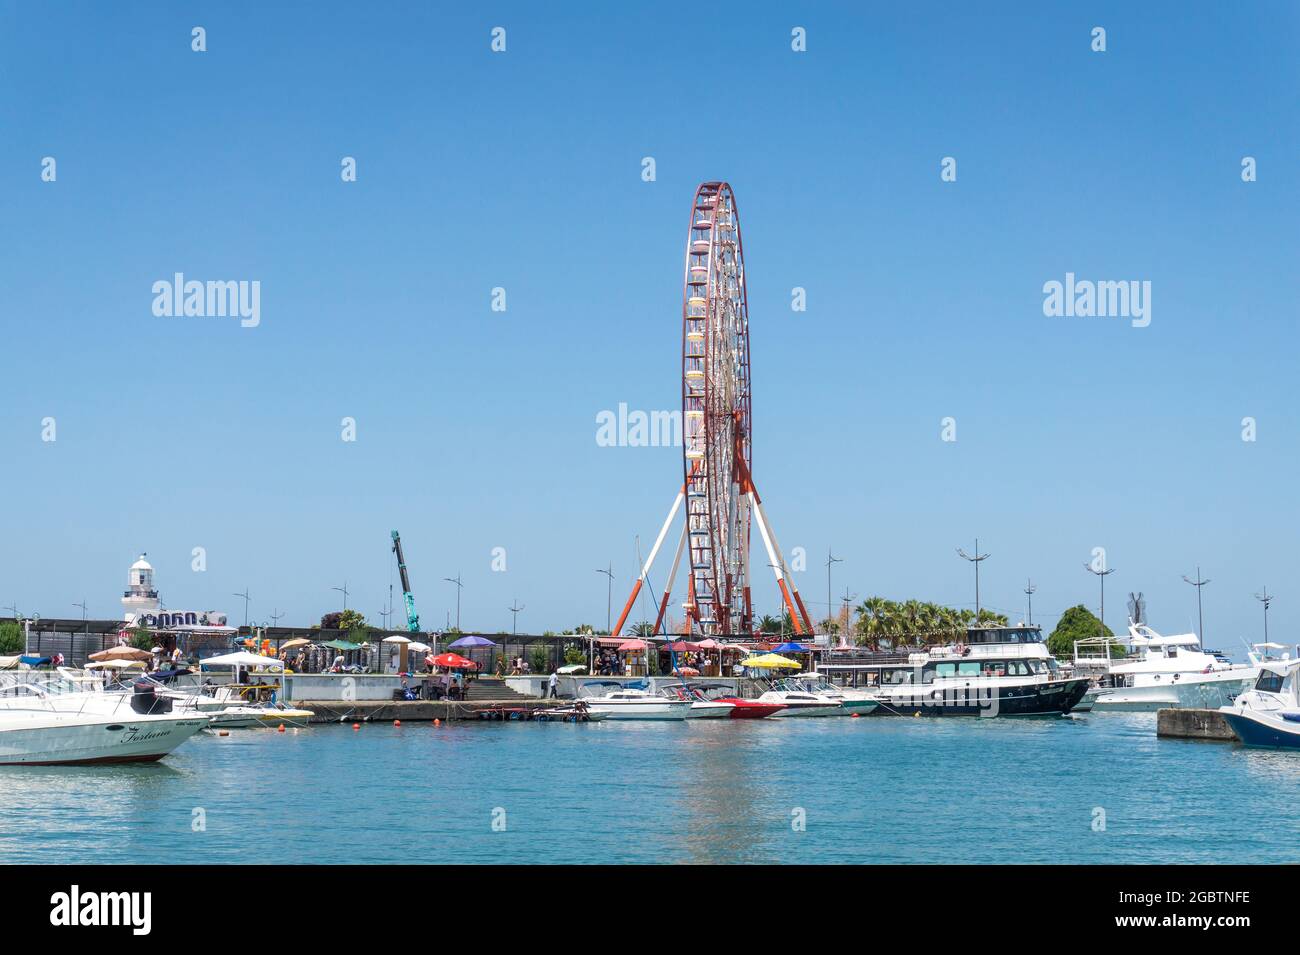 Batumi, Georgia - July 2, 2021: Batumi coastline. Popular Georgian resort city at Black Sea. Panoramic view of Ferris wheel, alphabetic tower, skyscrapers and the beach from the sea. Stock Photo